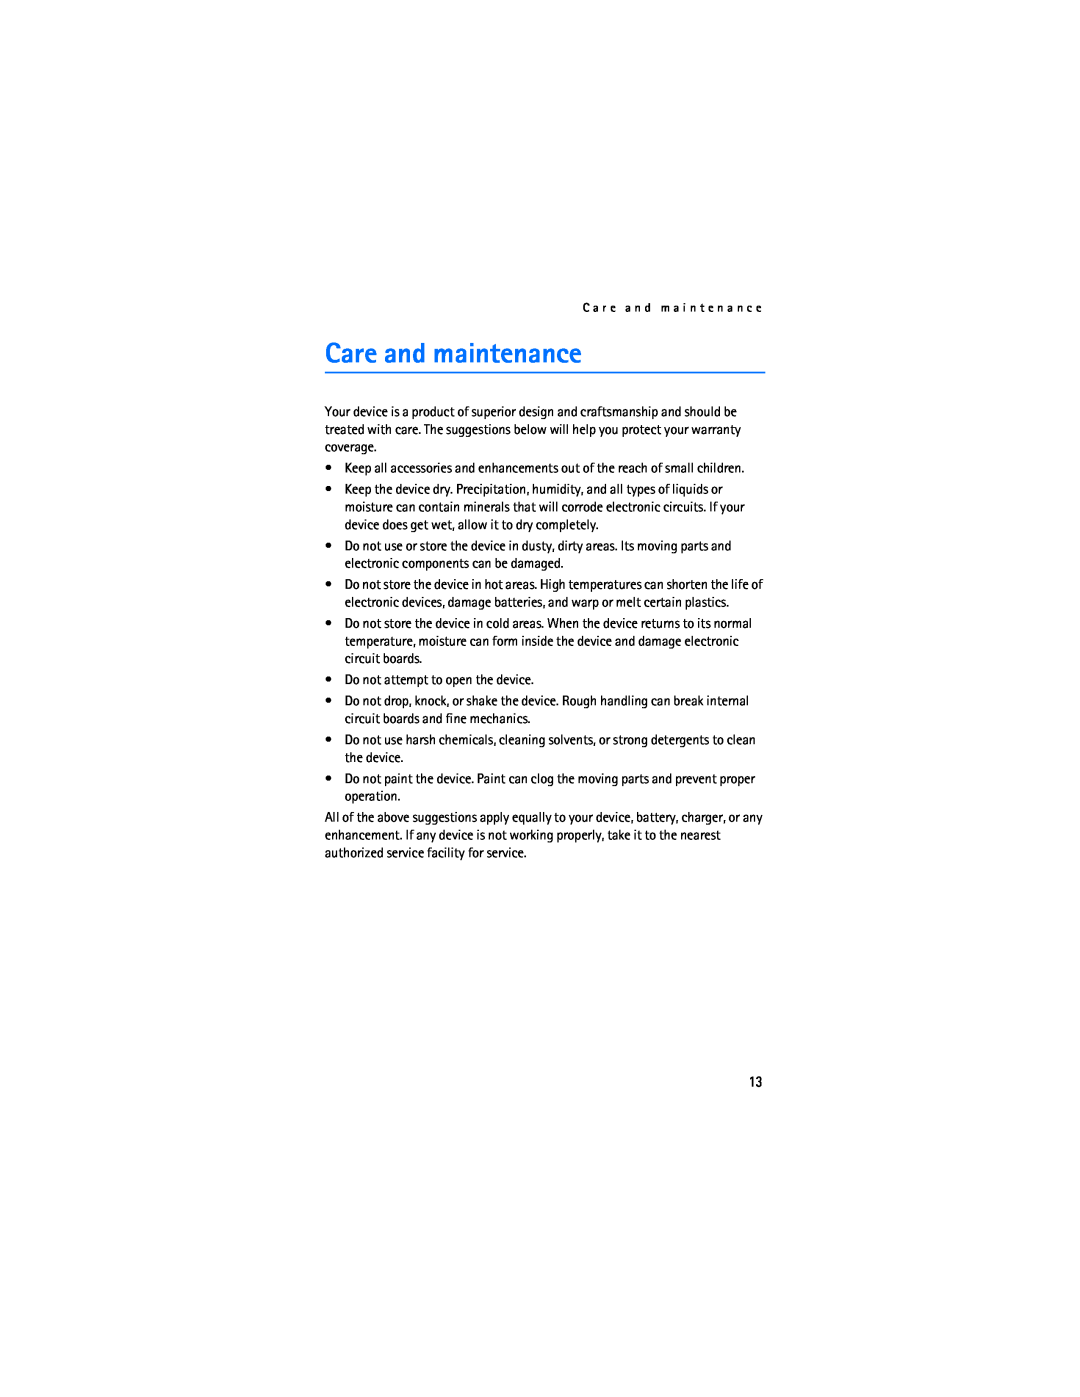 Nokia BH-700 manual Care and maintenance 